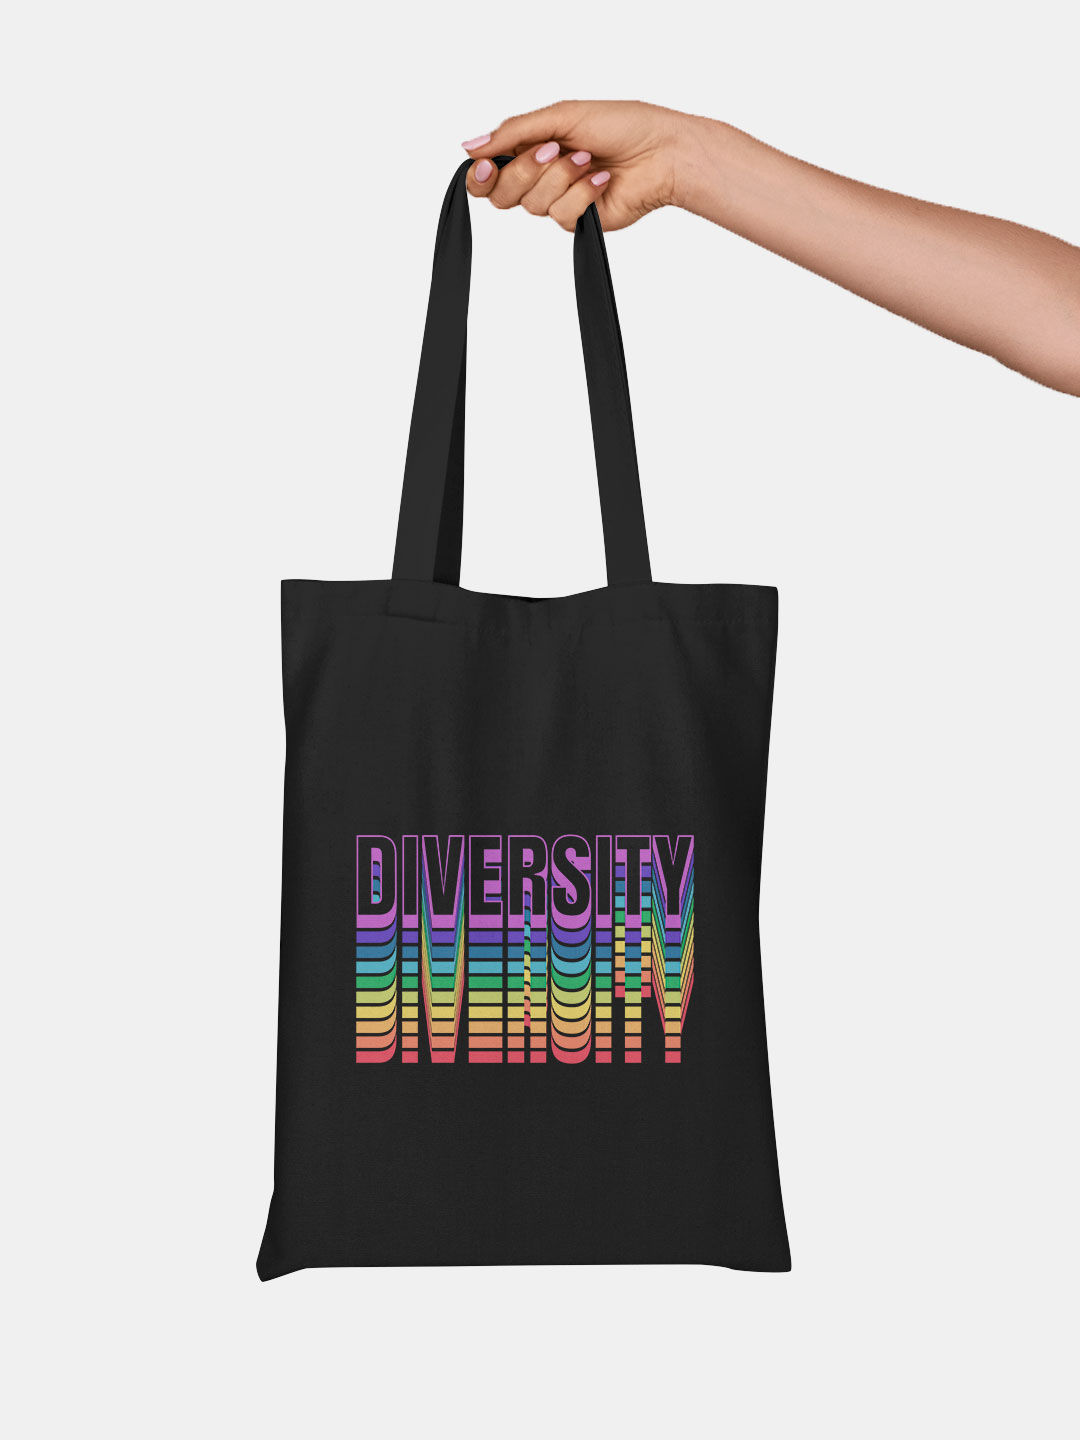 Buy Diversity - Tote Bags Tote Bags Online